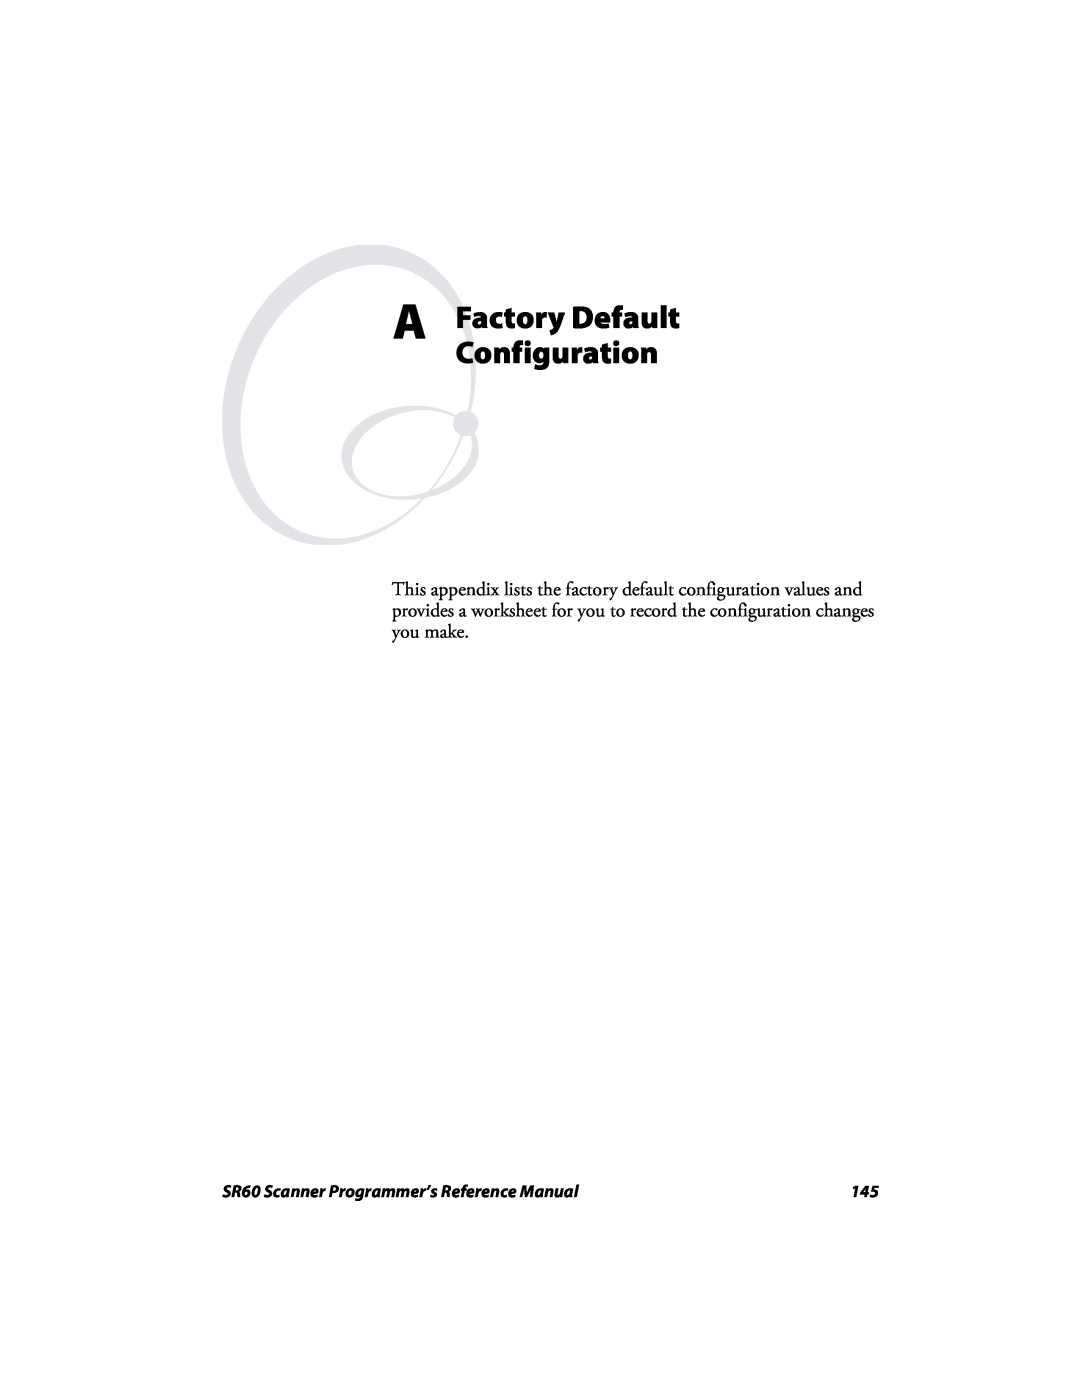 Intermec manual A Factory Default Configuration, SR60 Scanner Programmer’s Reference Manual 